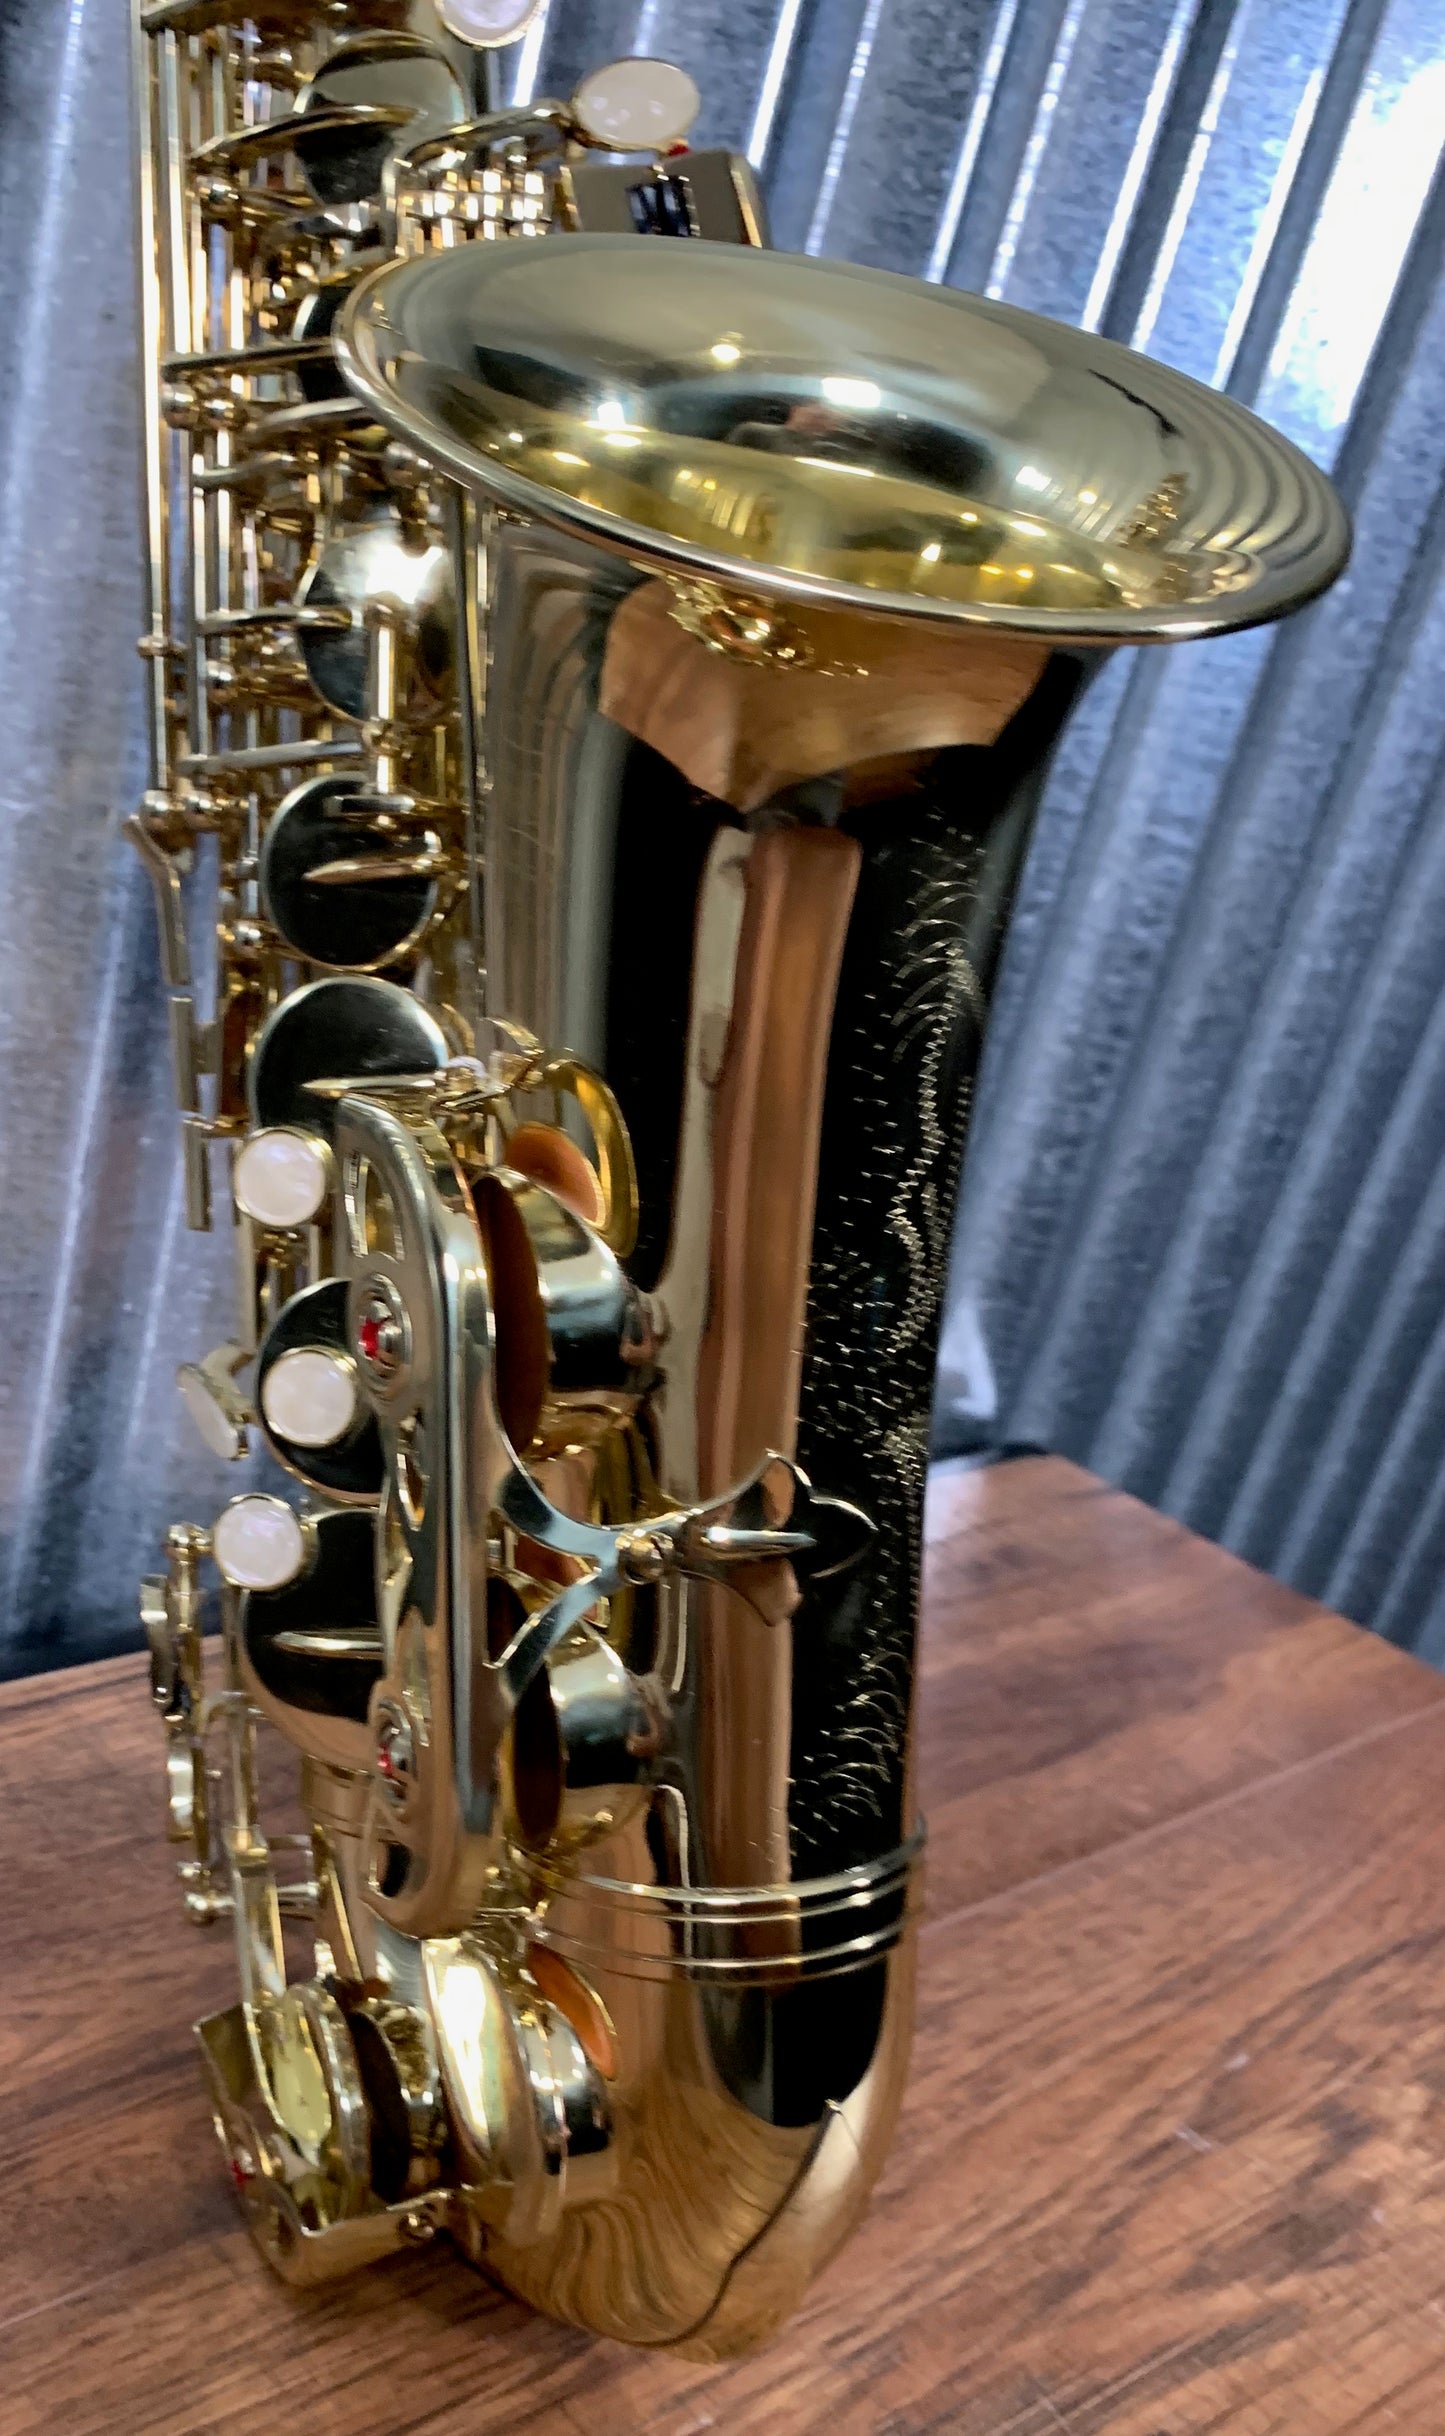 Lauren LAS100 Student Brass EB Alto Saxophone & Case #0005 Used